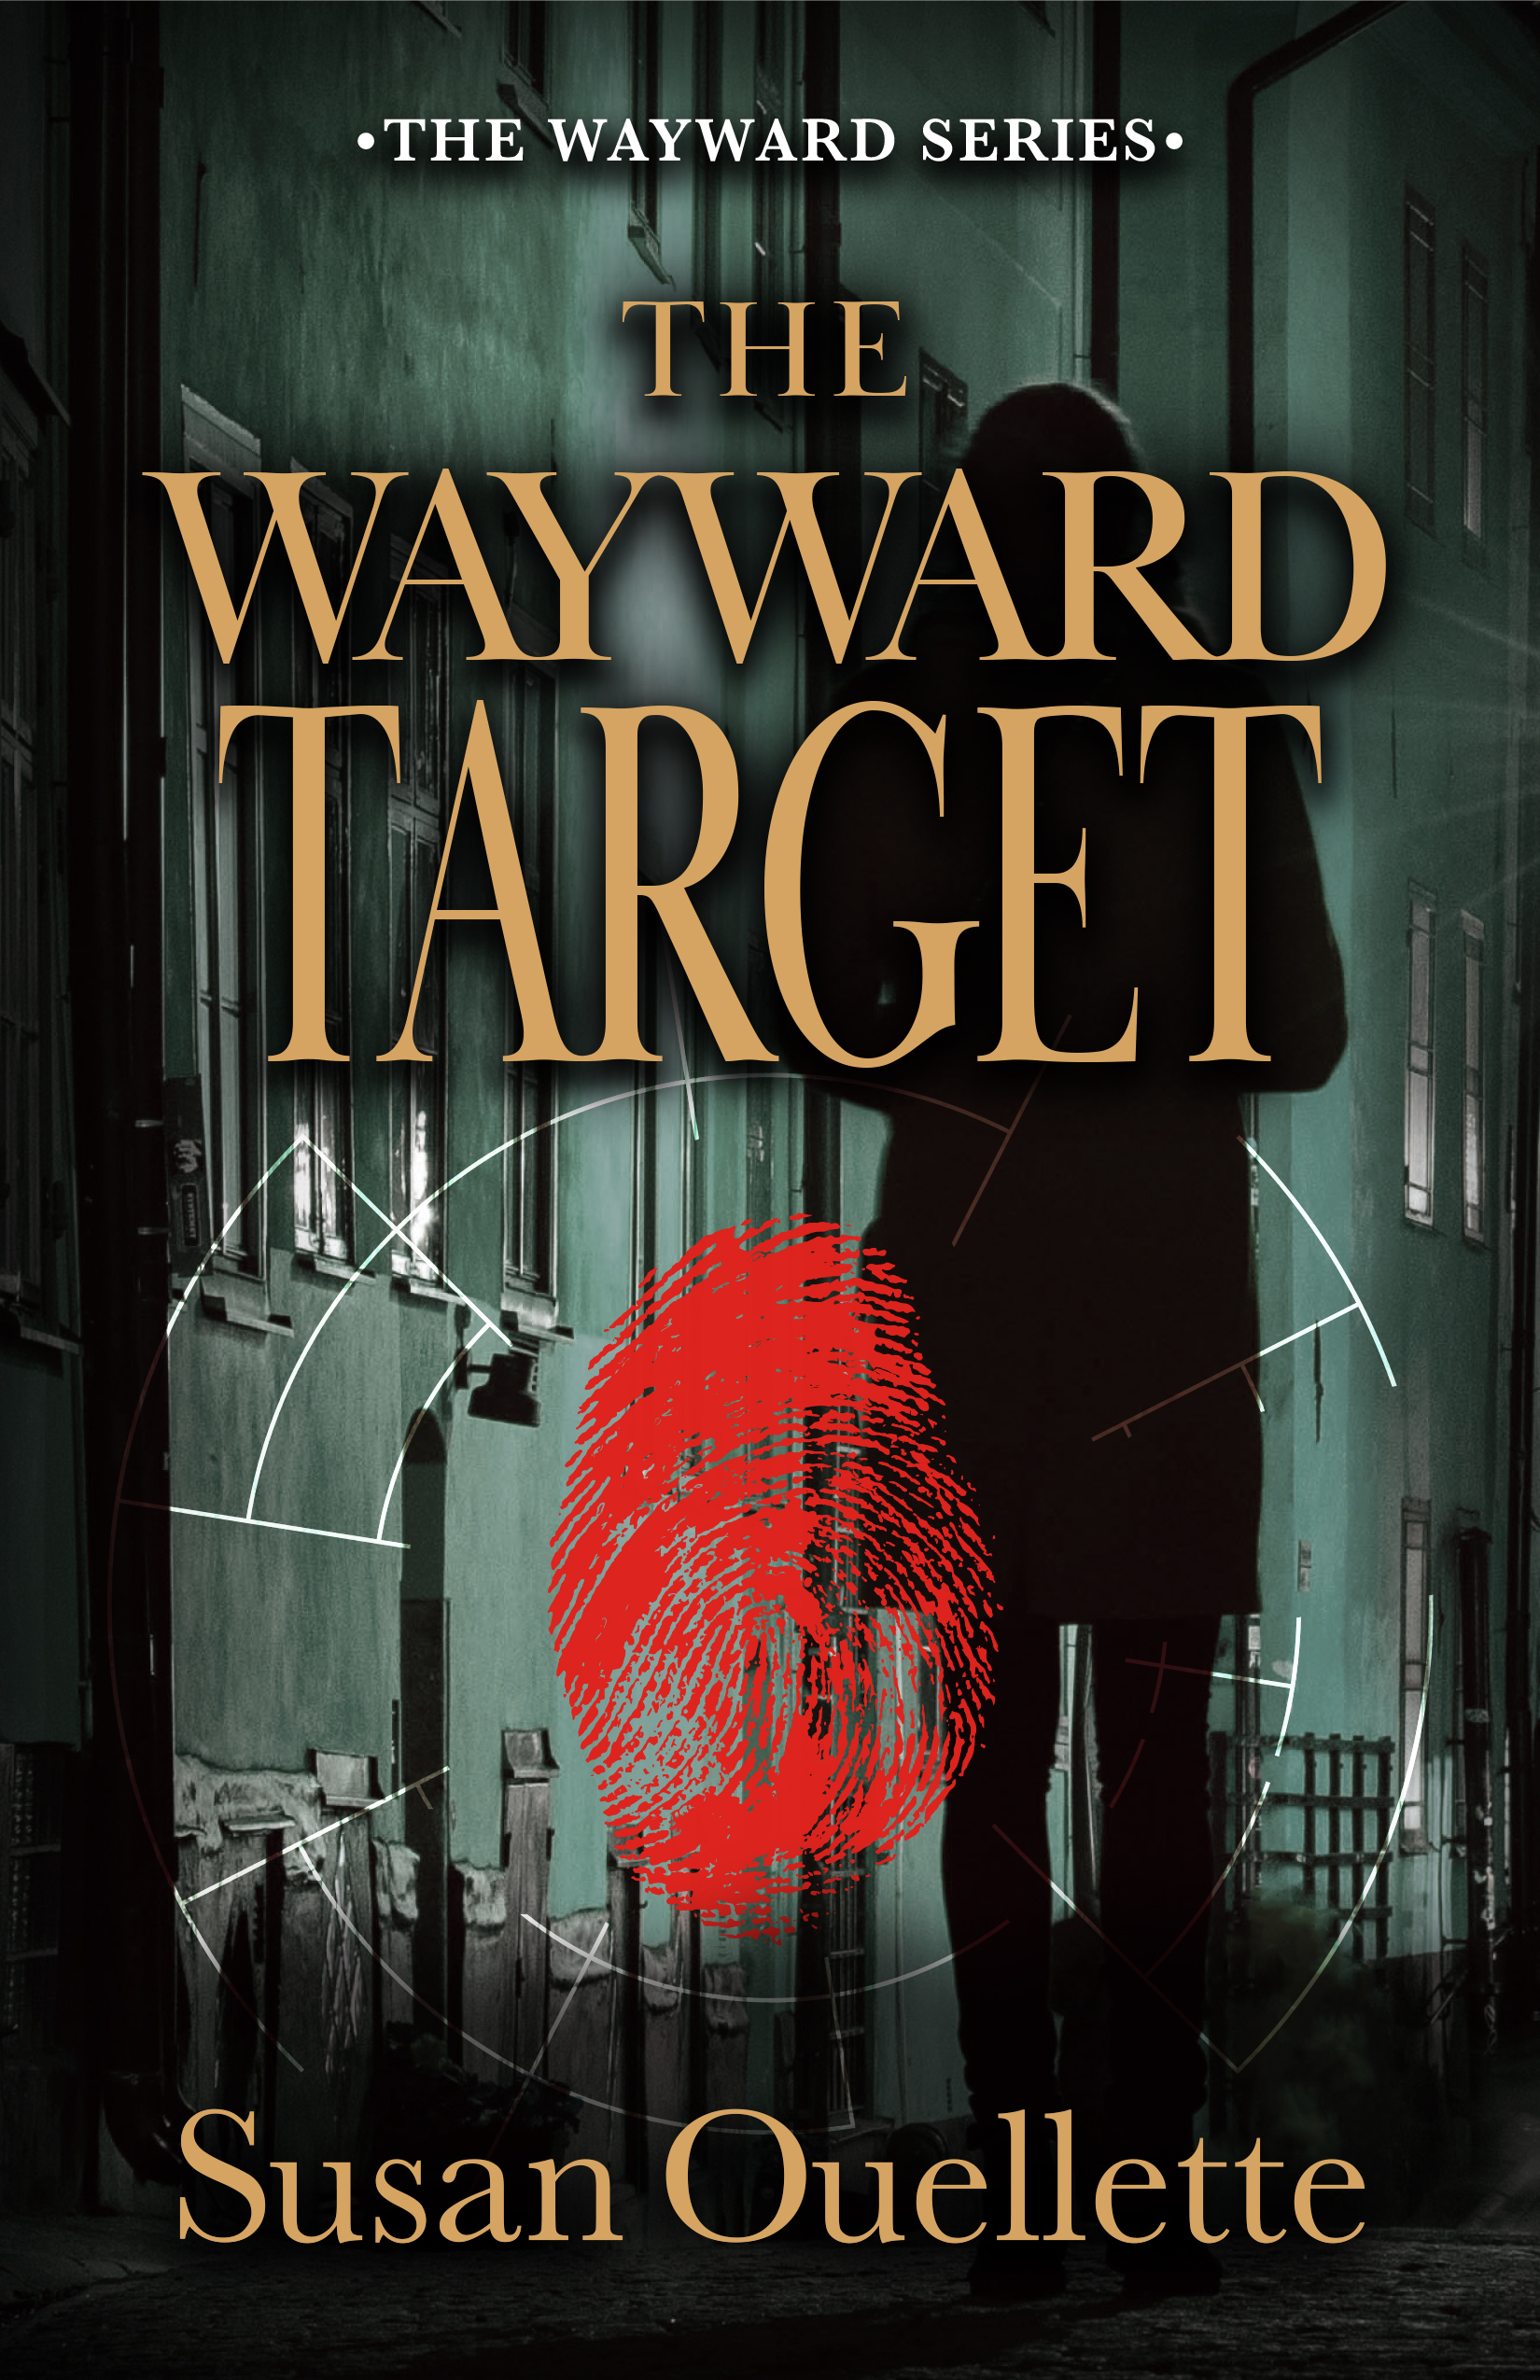 The Wayward Target by Susan Ouellette